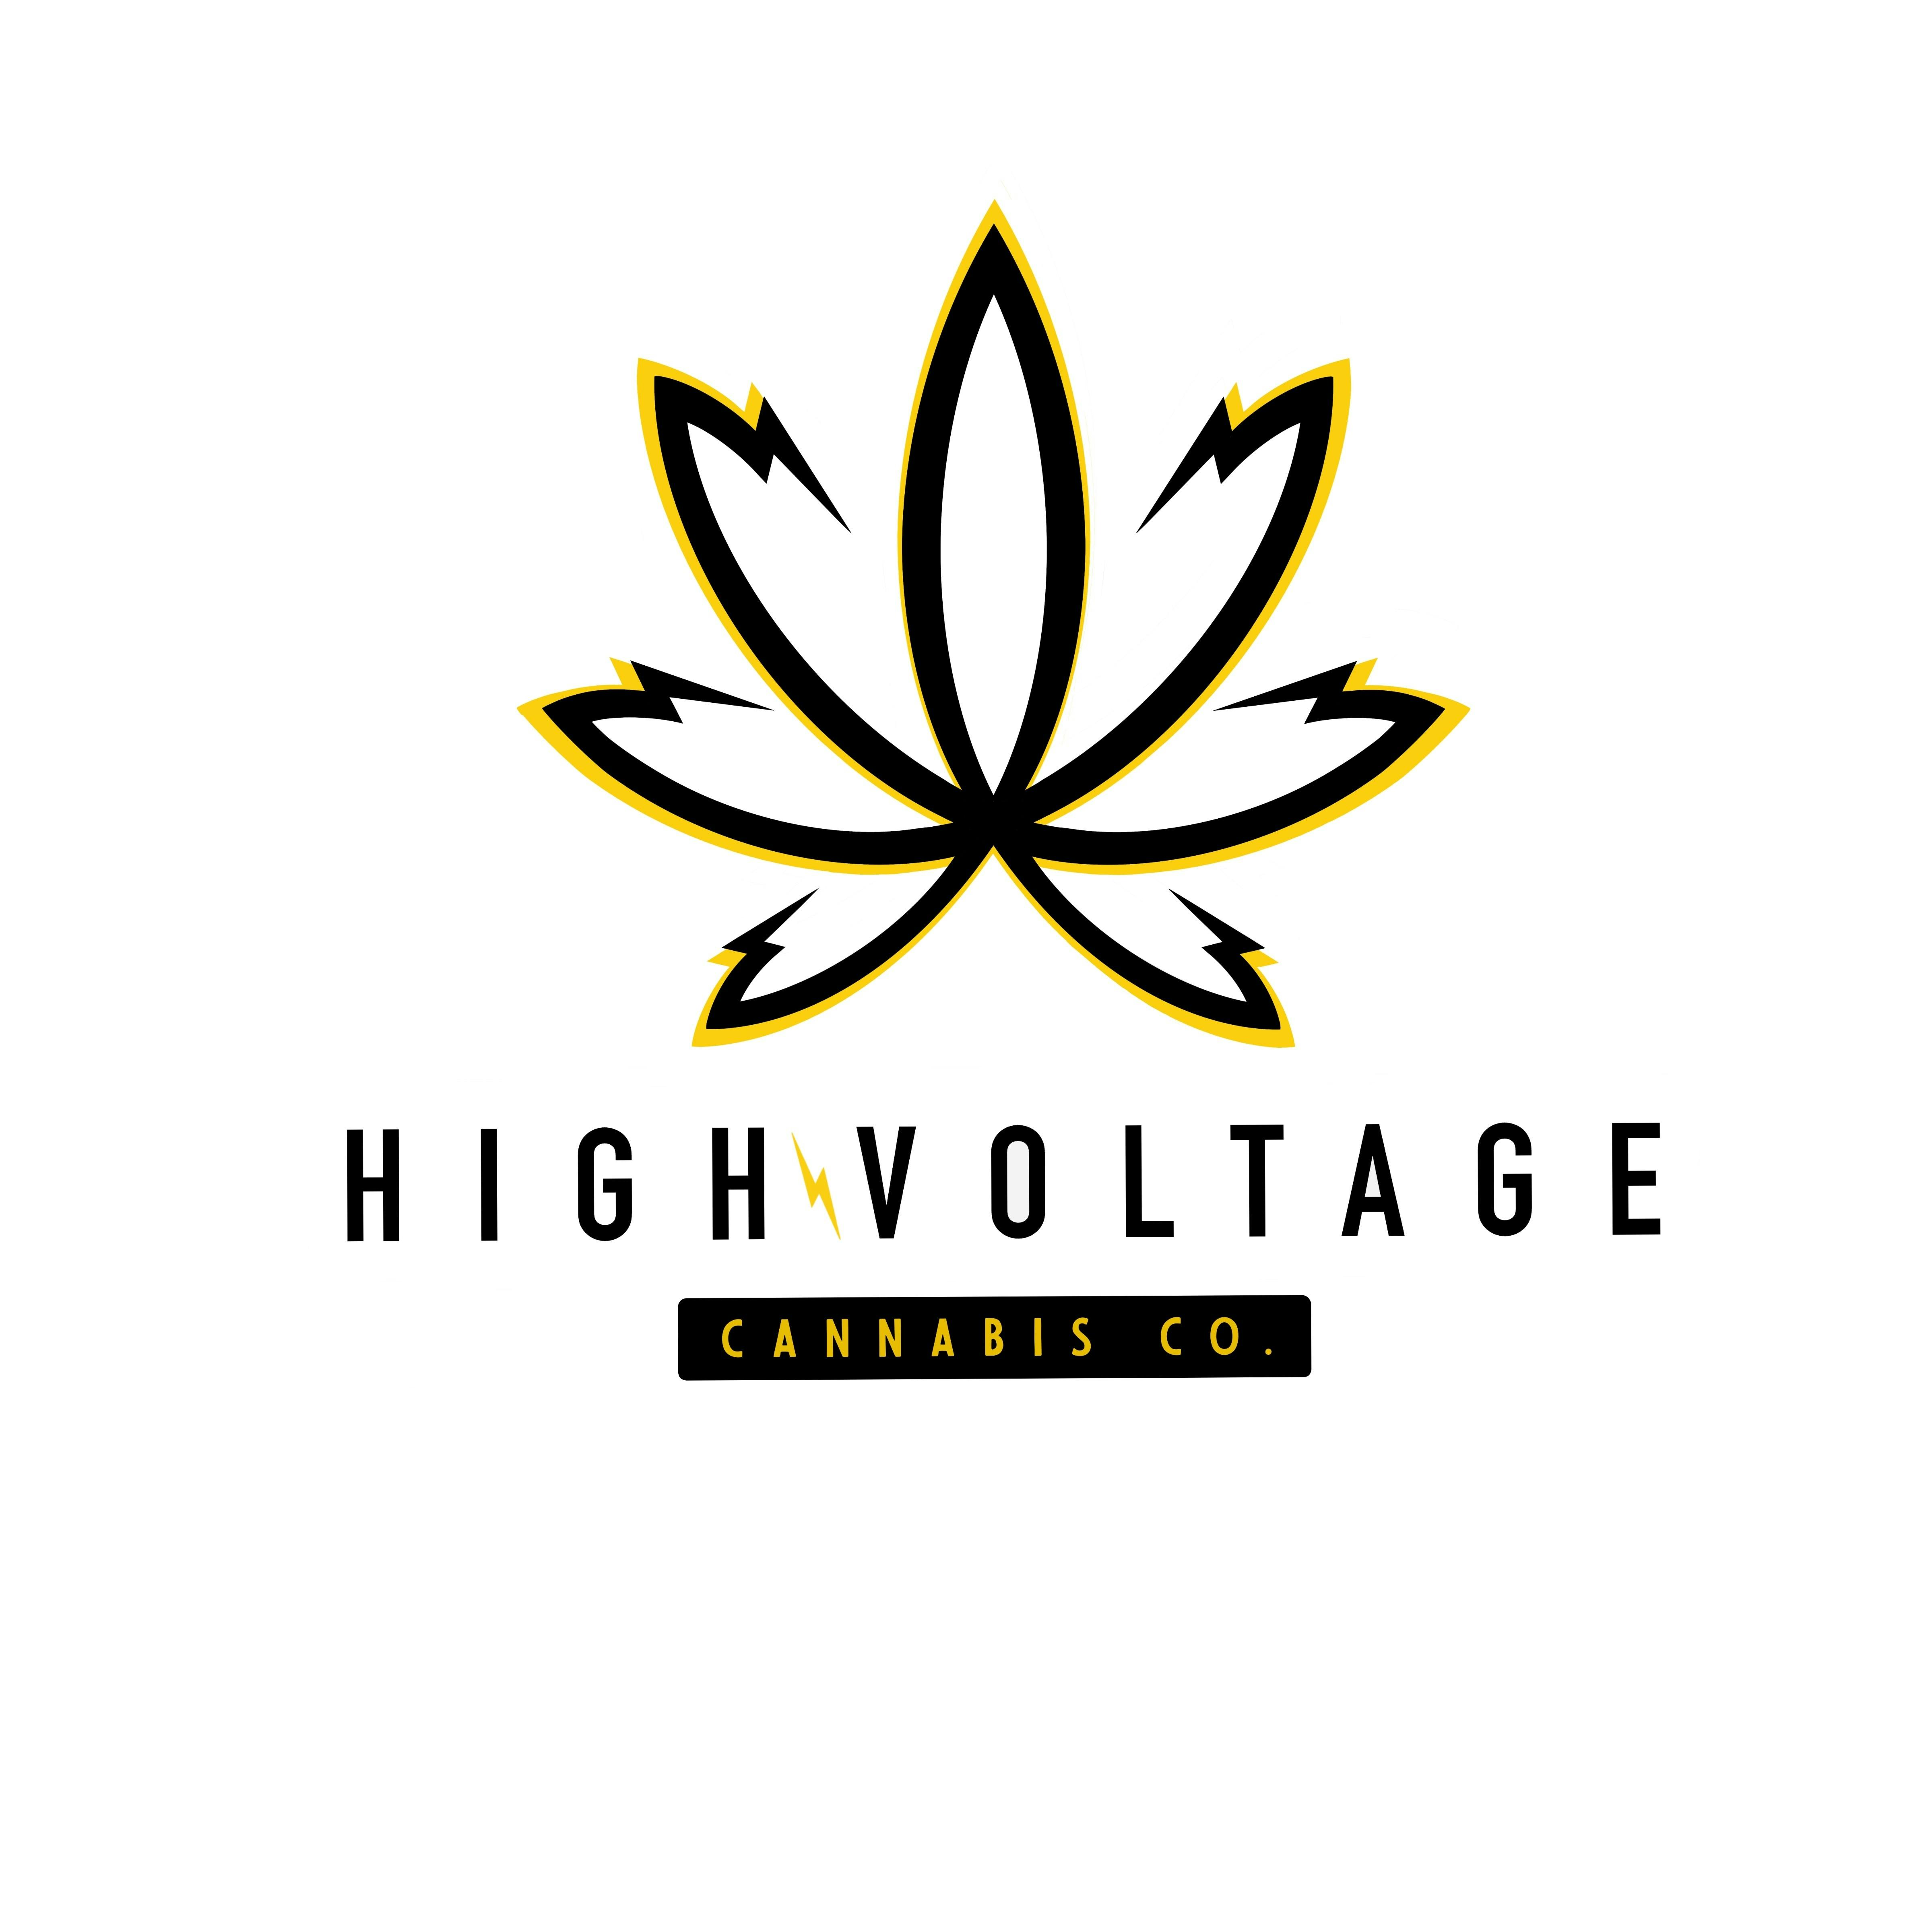 High Voltage Cannabis Co.